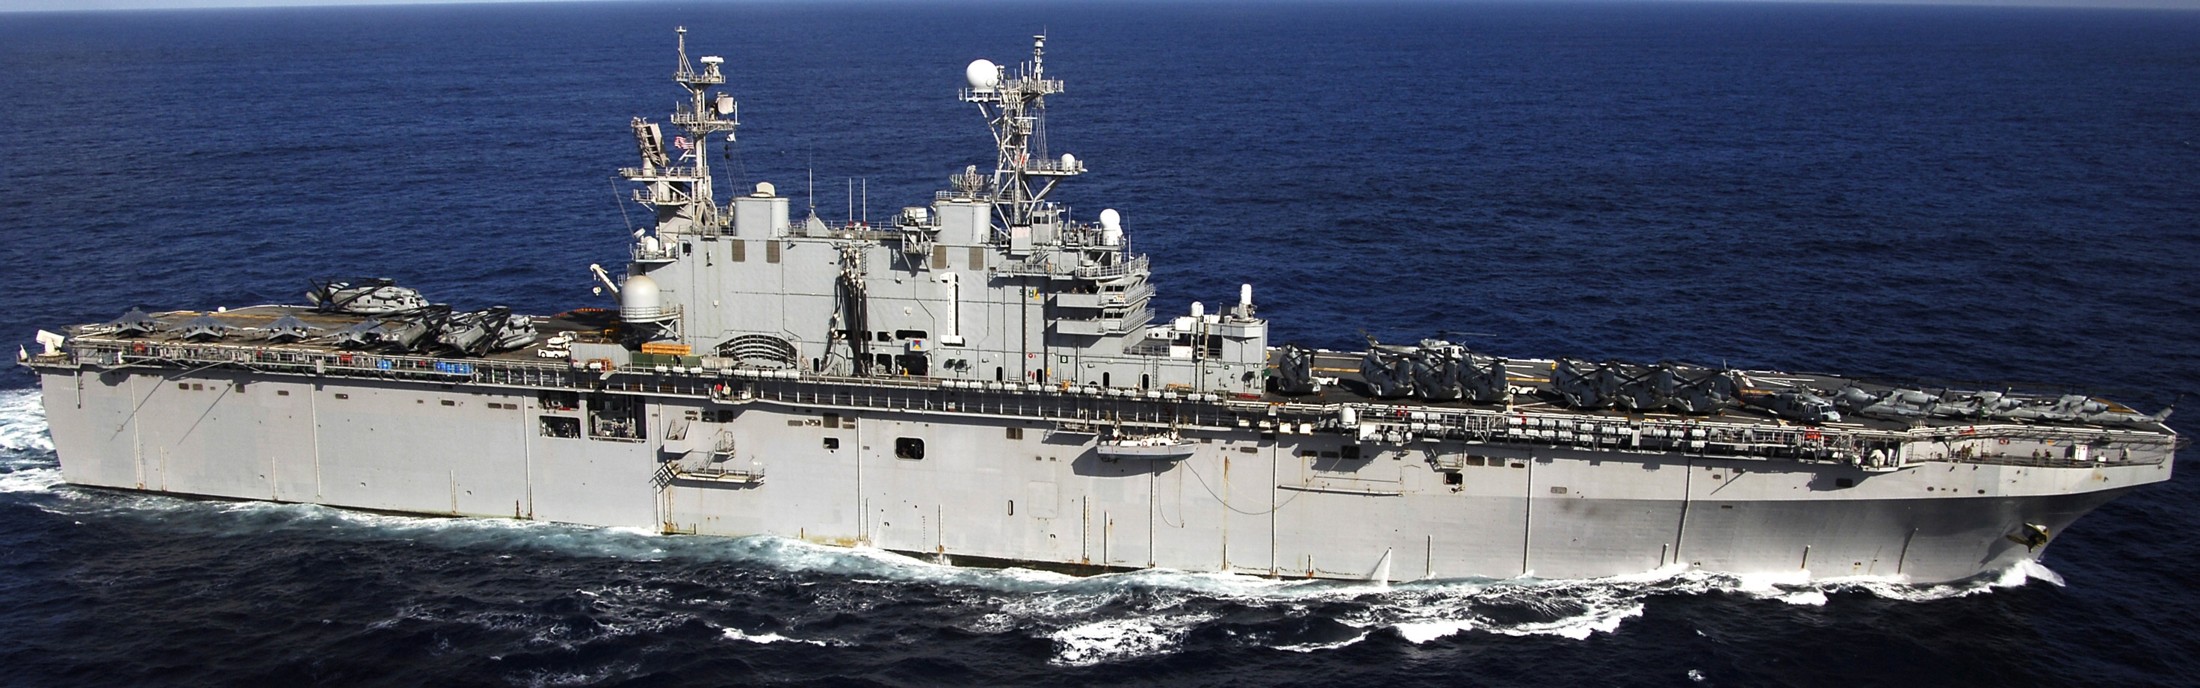 lha-1 uss tarawa amphibious assault ship us navy 11th meu soc marines hmm-166 rein 39